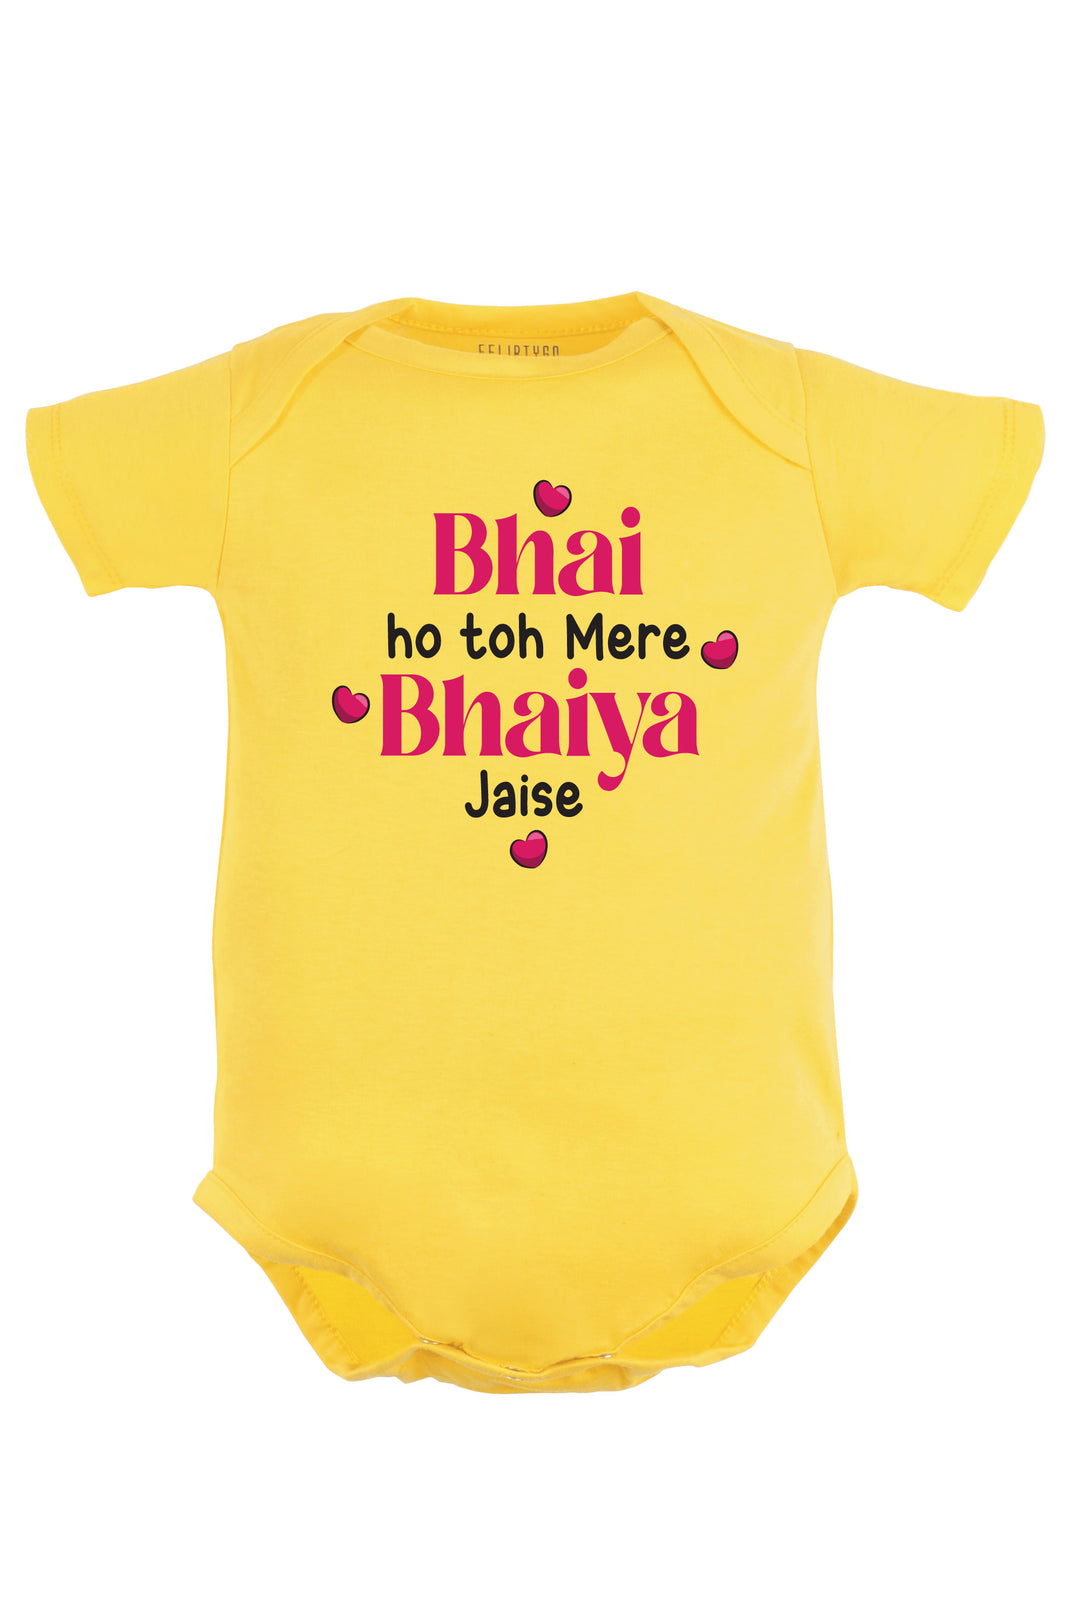 Bhai Ho Toh Mere Bhaiya Jaise Baby Romper | Onesies